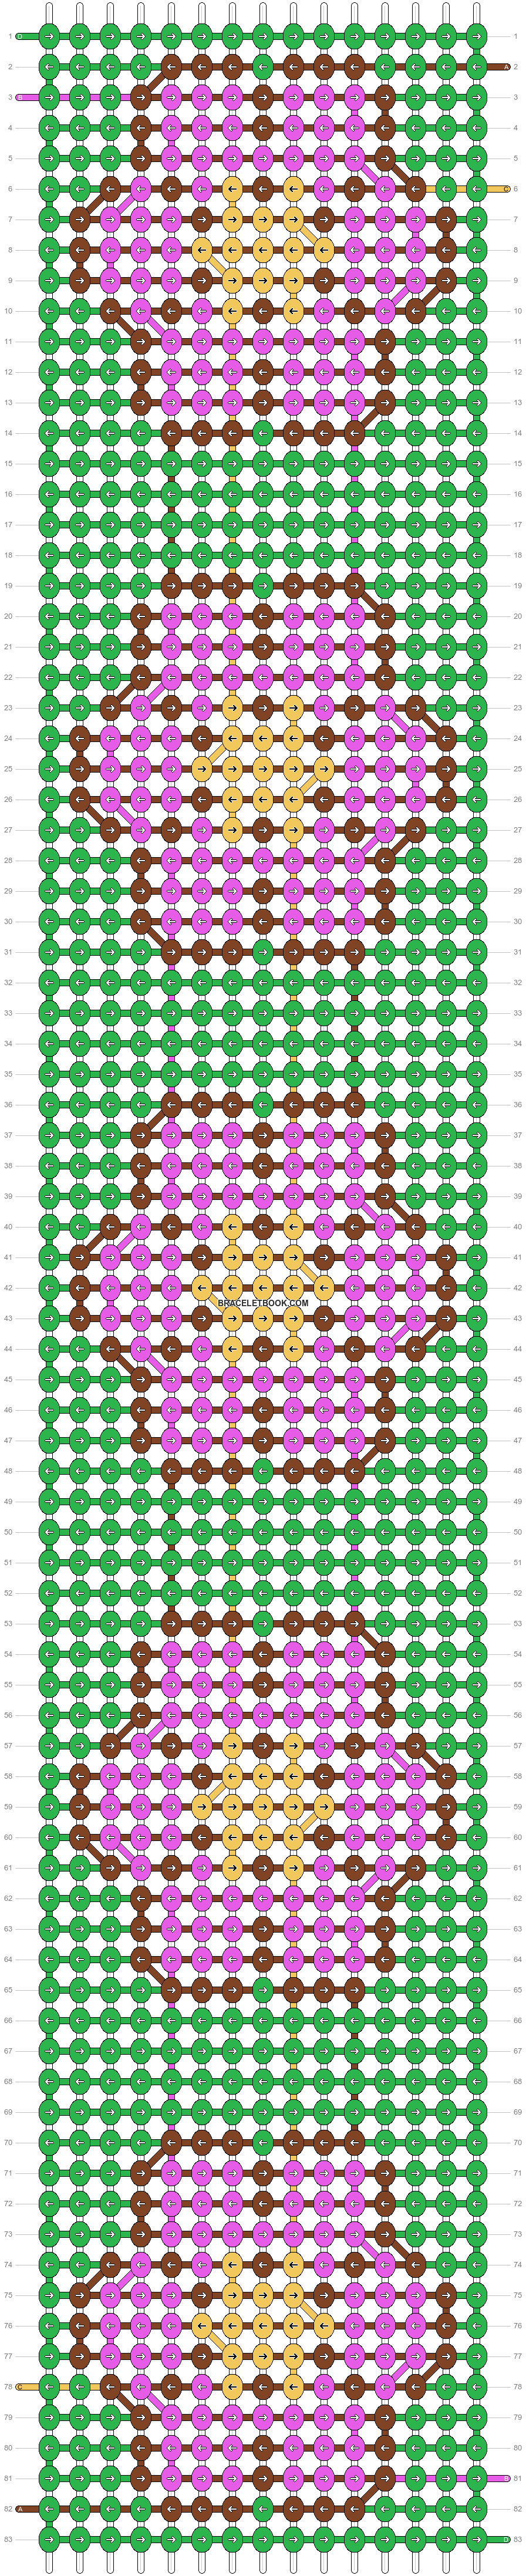 Alpha pattern #41881 variation #58380 pattern